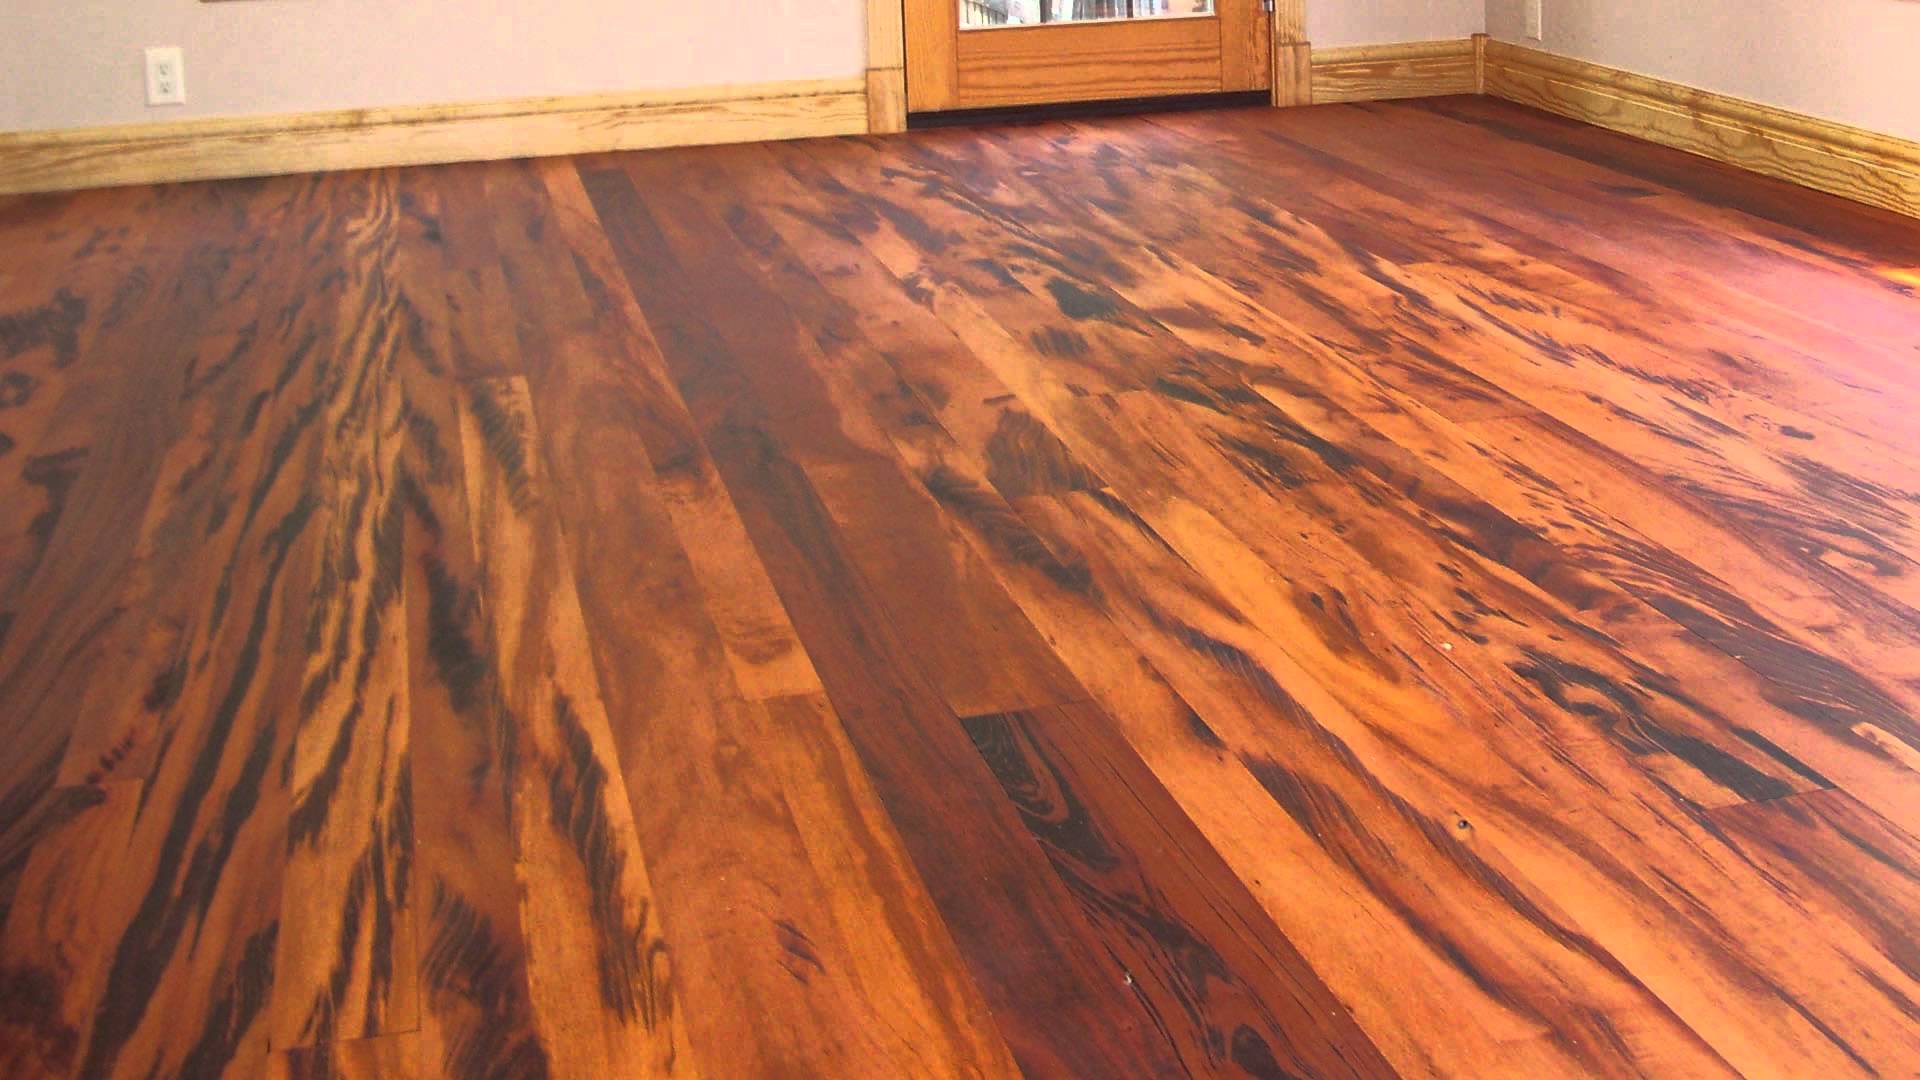 Canareno Professional Renovation Flooring, Brazilian Koa Tigerwood Hardwood Flooring